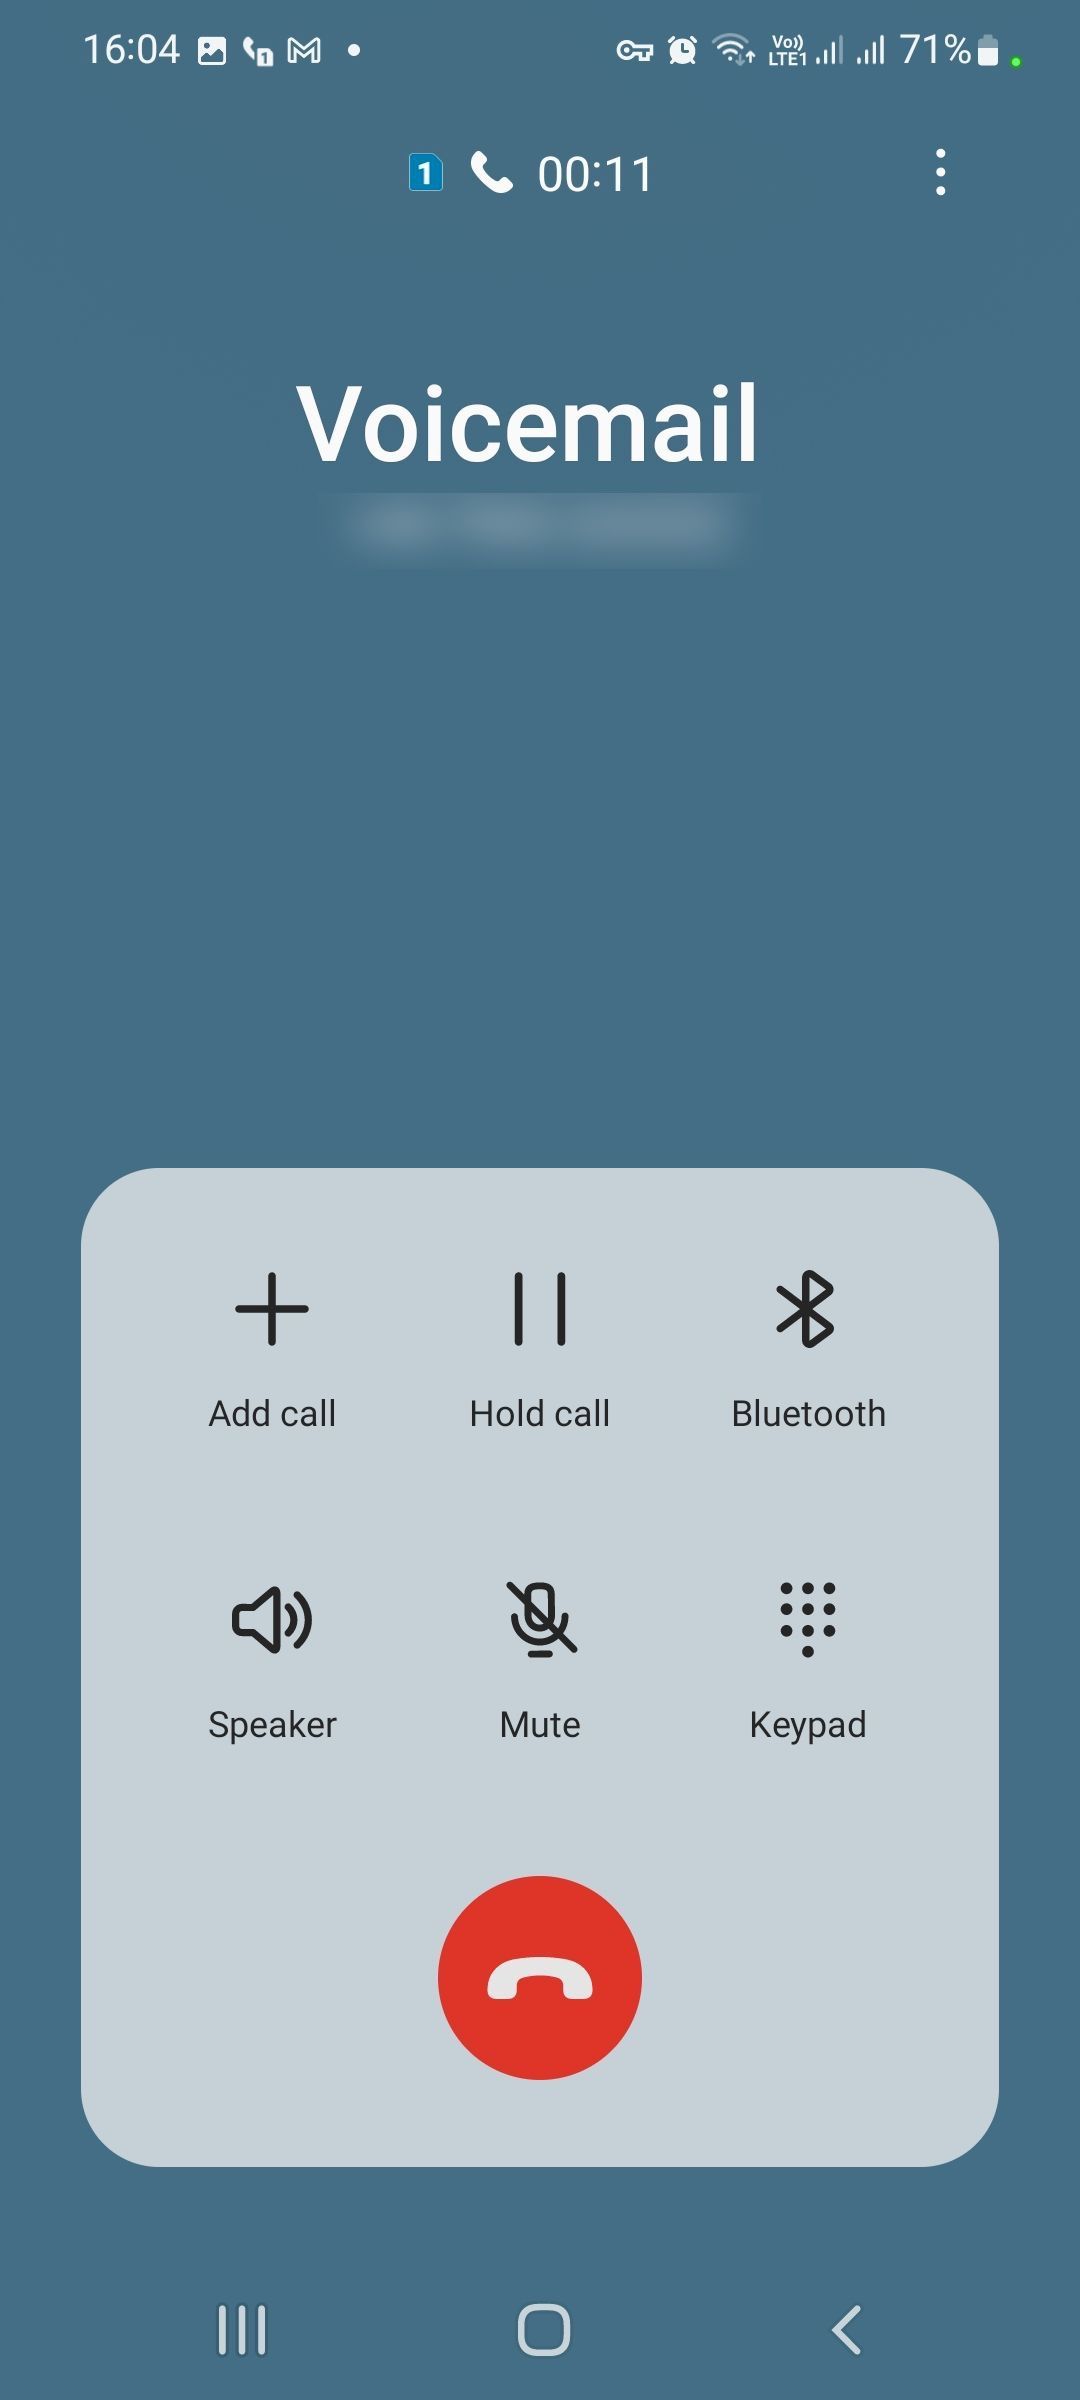 Samsung access voicemail via call